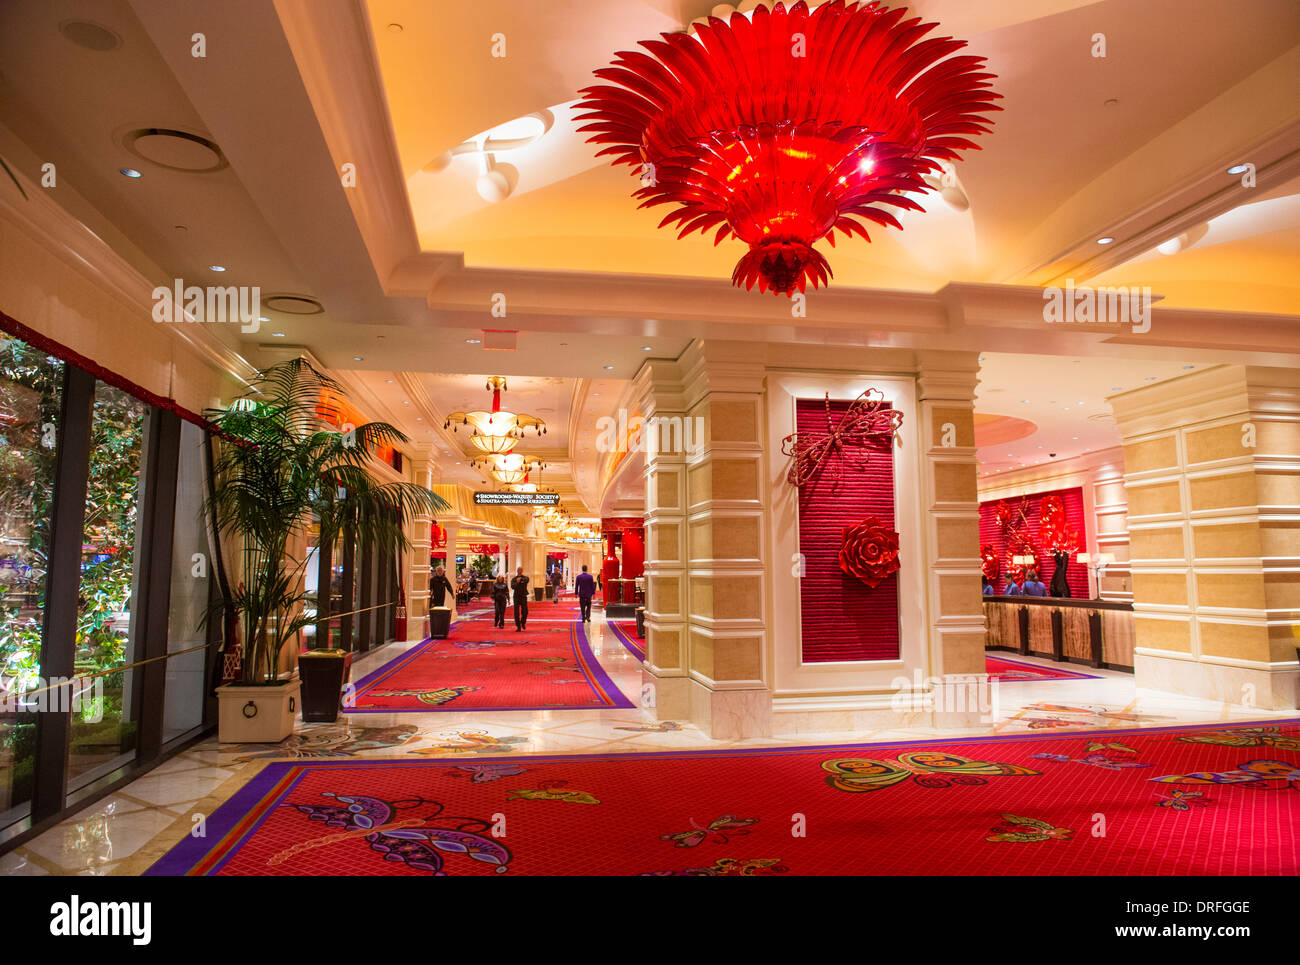 Inside Casino in Las Vegas Stock Photo - Alamy